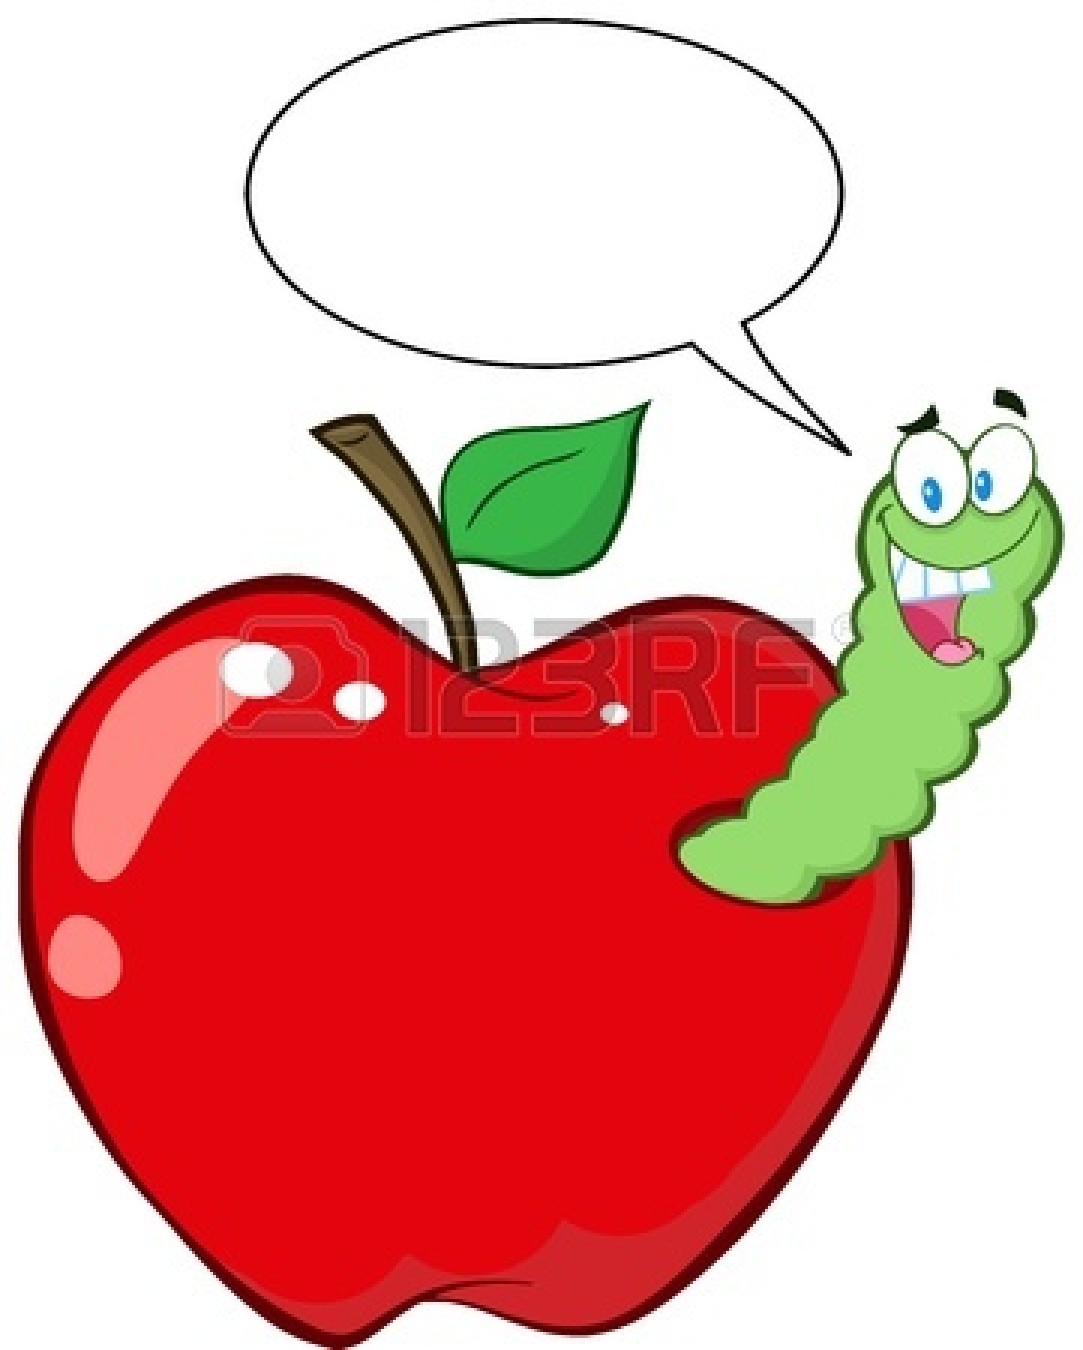 Teacher Apple Worm 14670245 Happy Worm In Red Apple With Speech Bubble